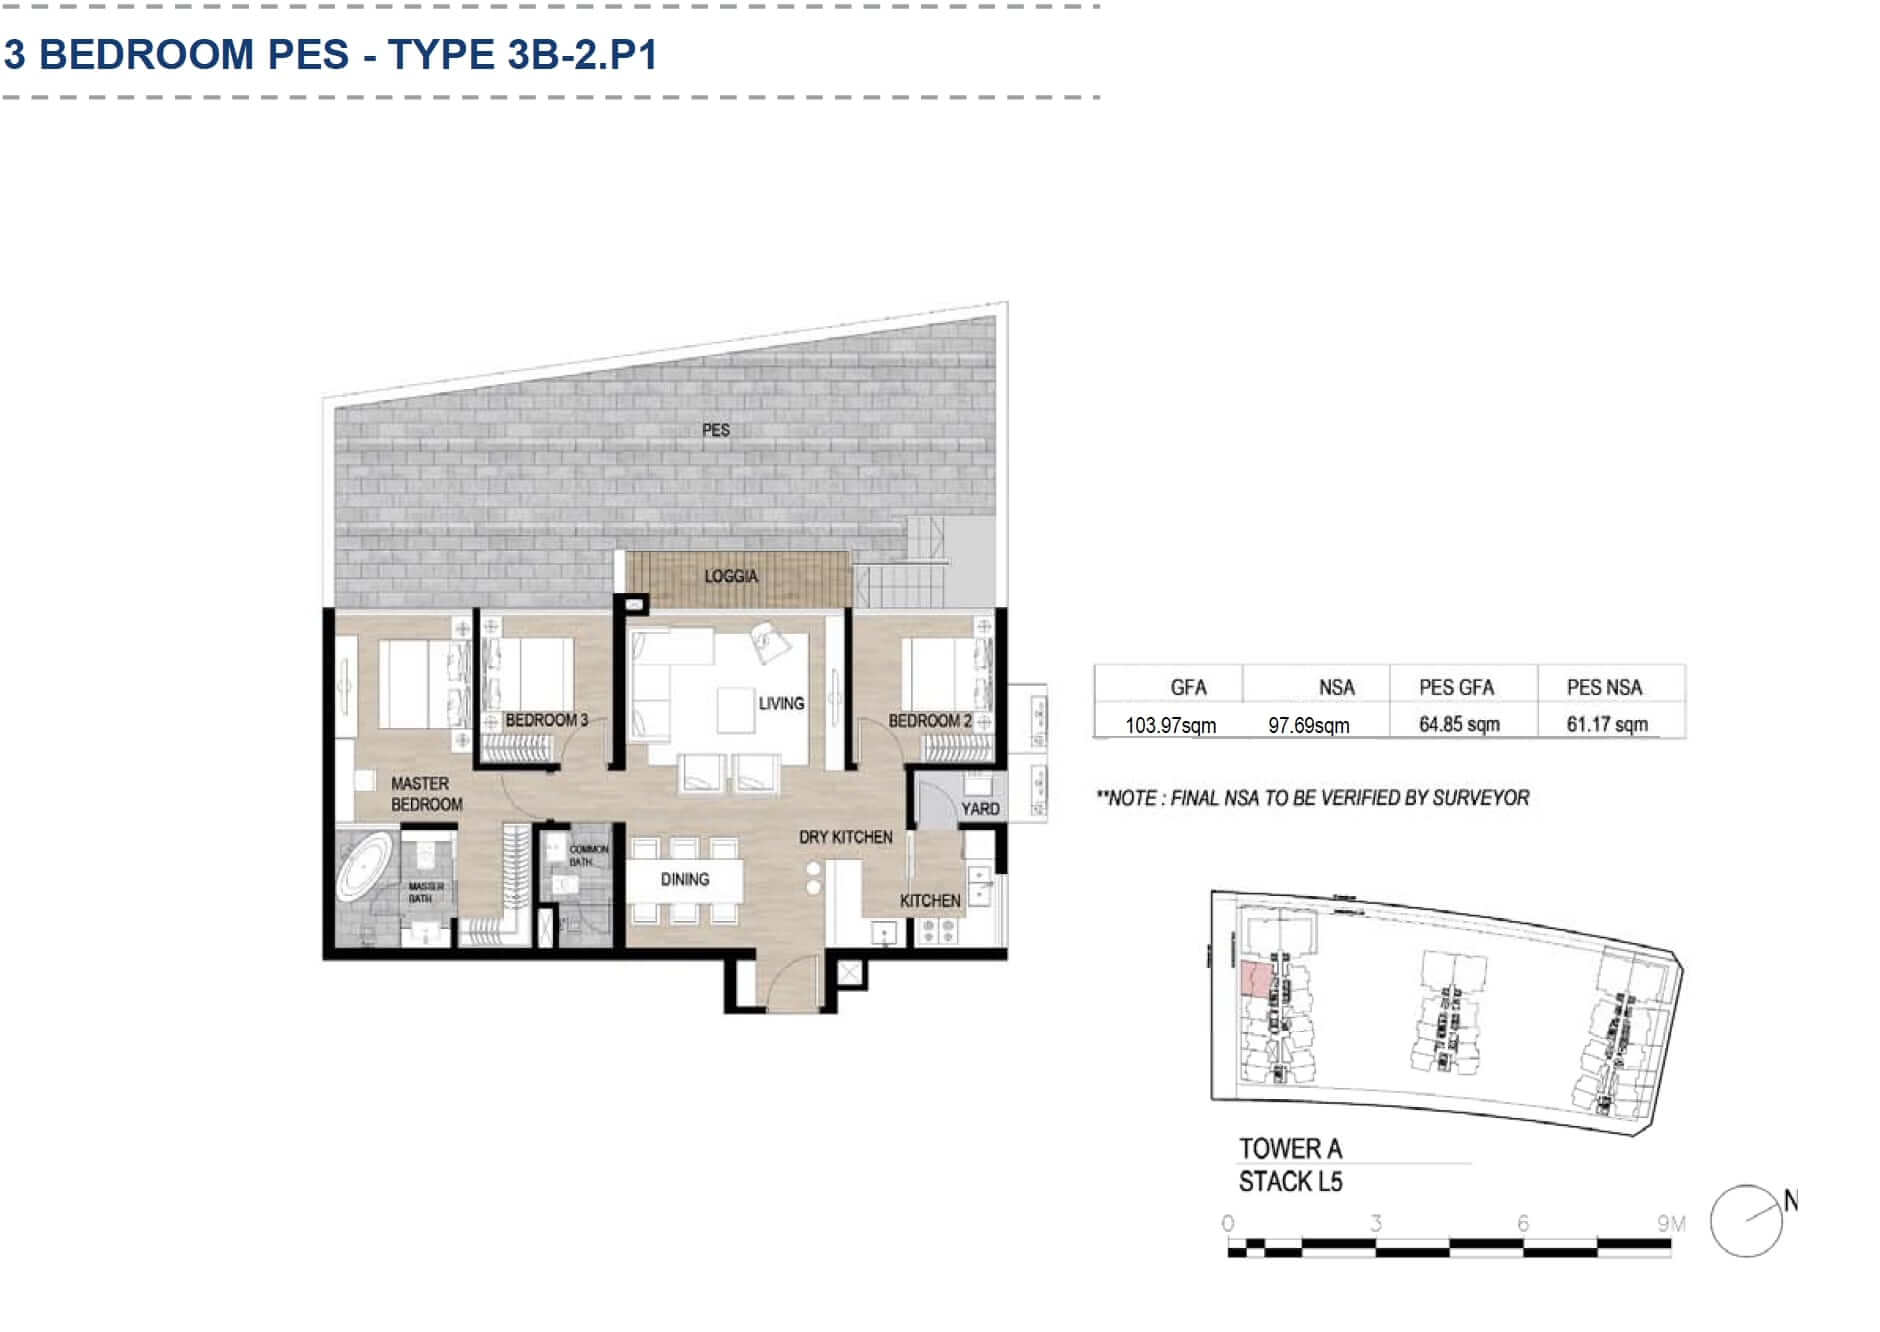 Floor plan of garden apartment Metropole Thu Thiem District 2 5